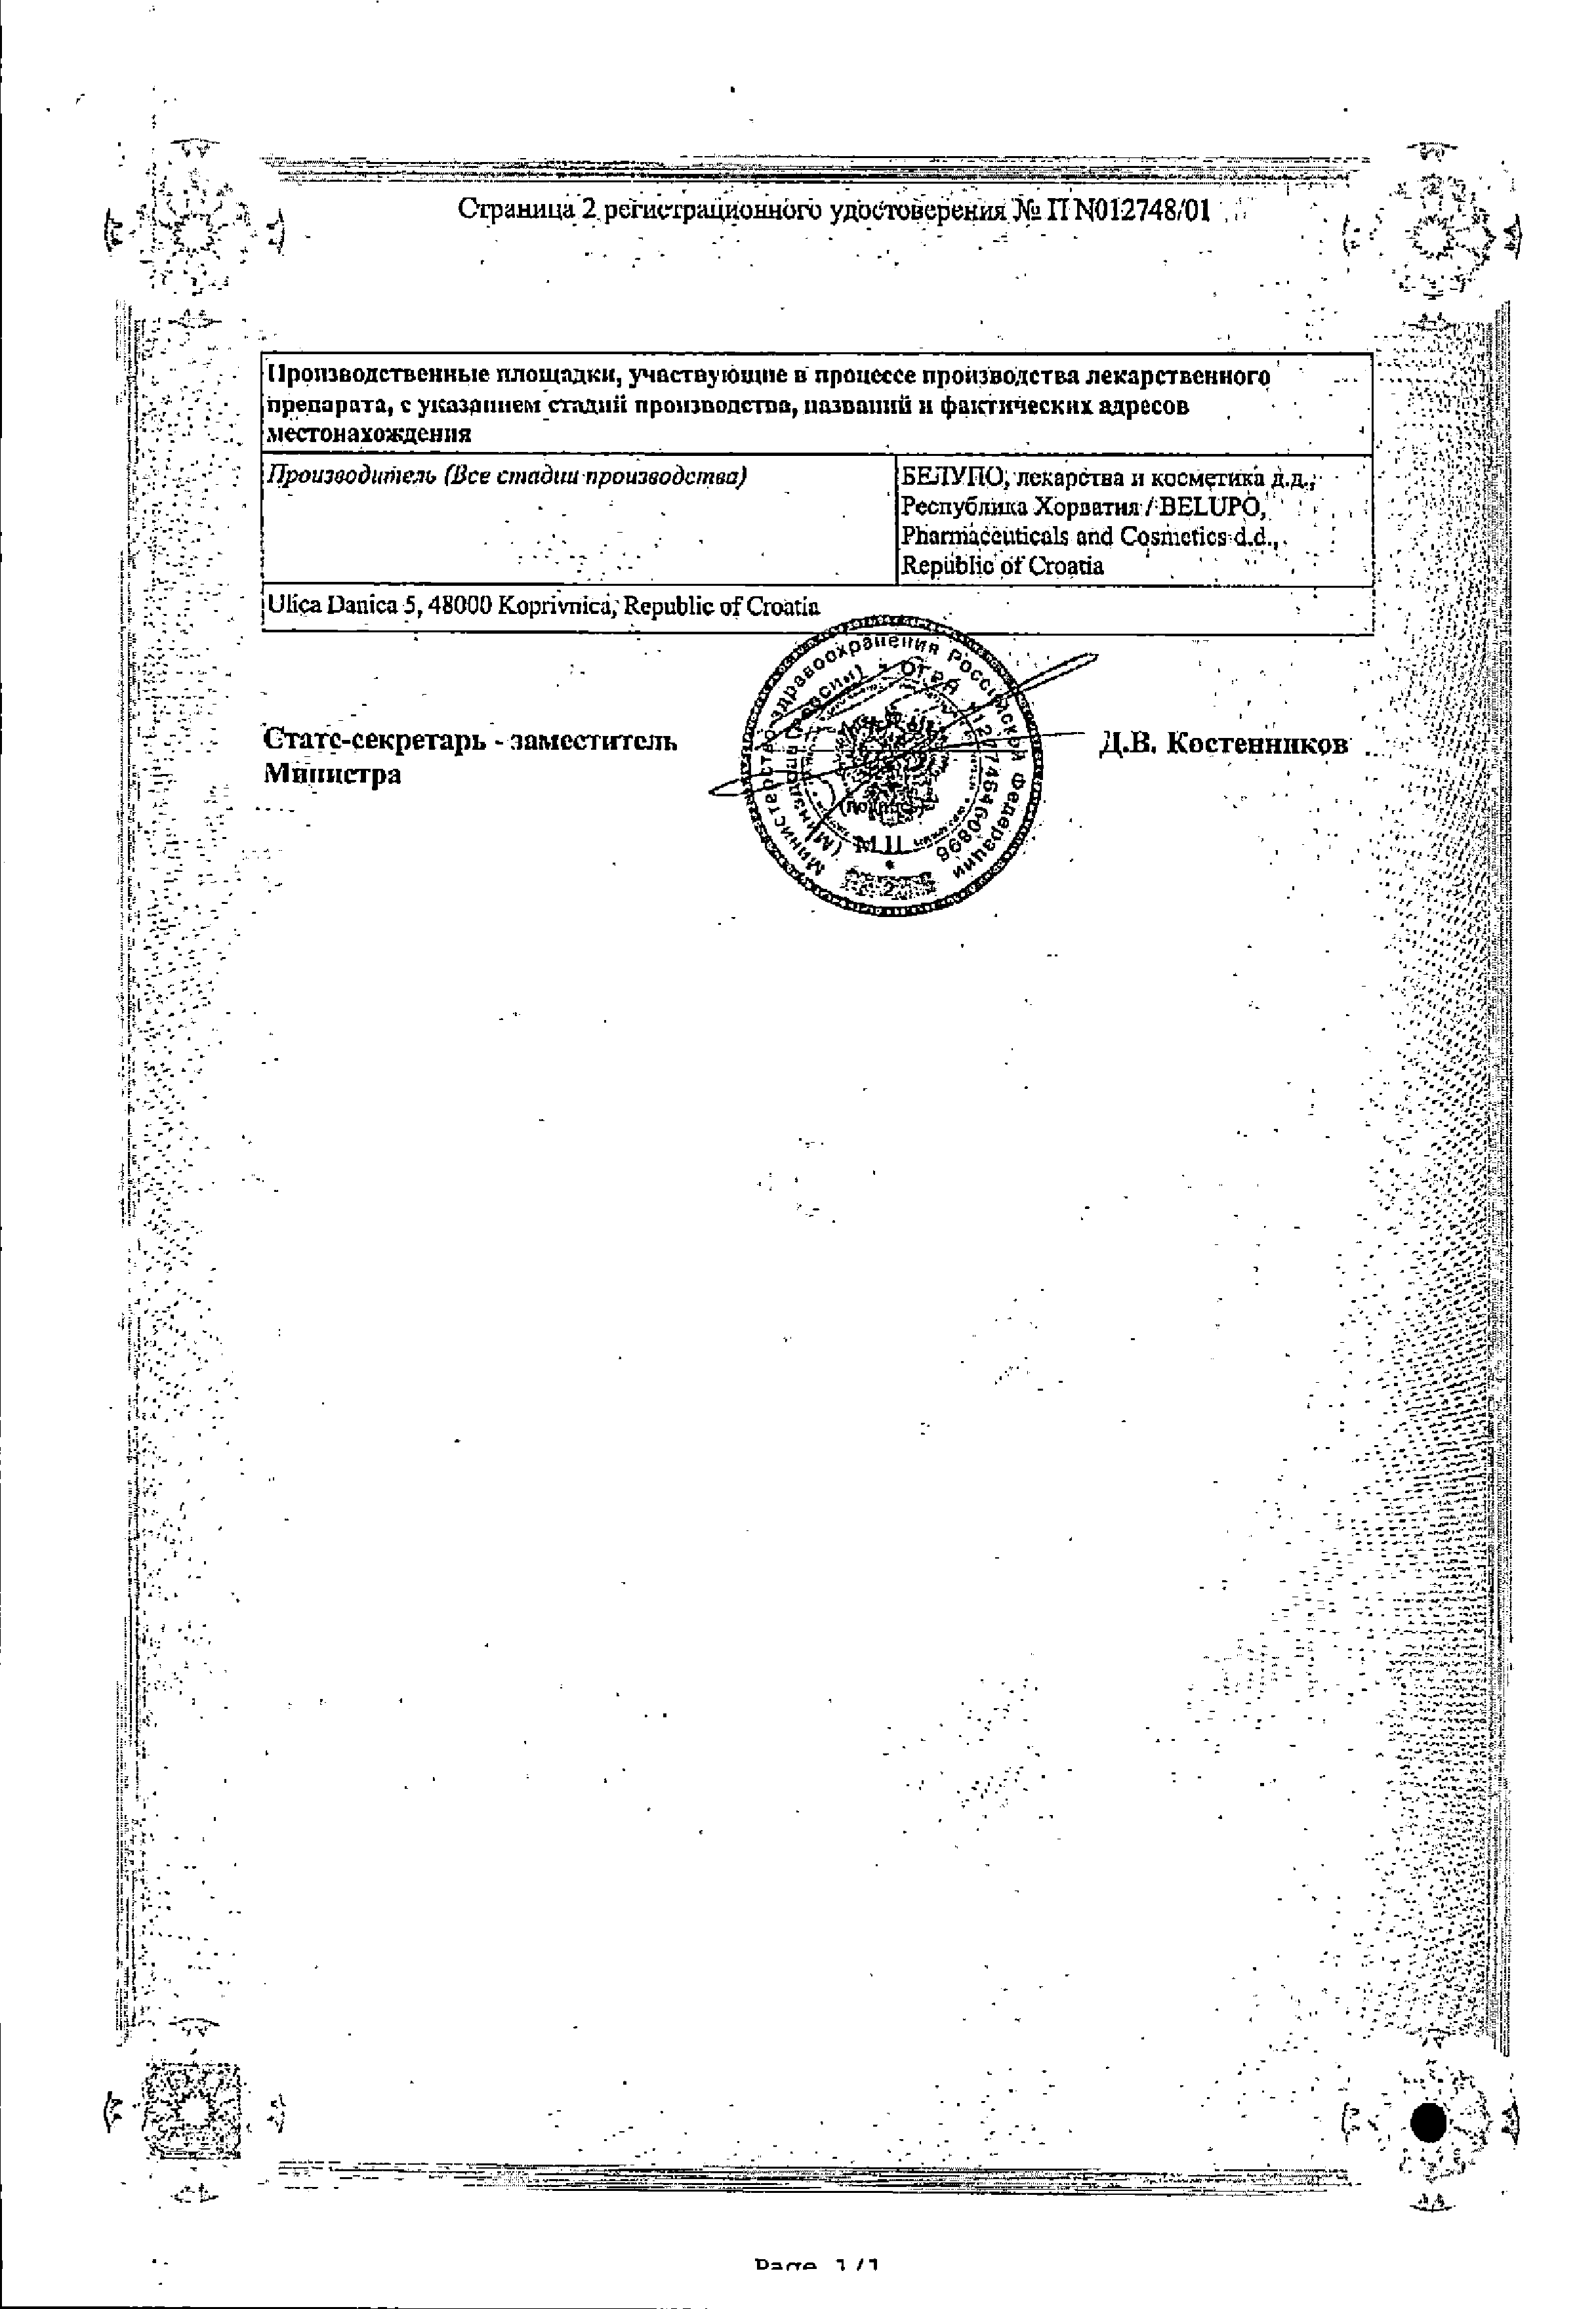 Белосалик лосьон сертификат